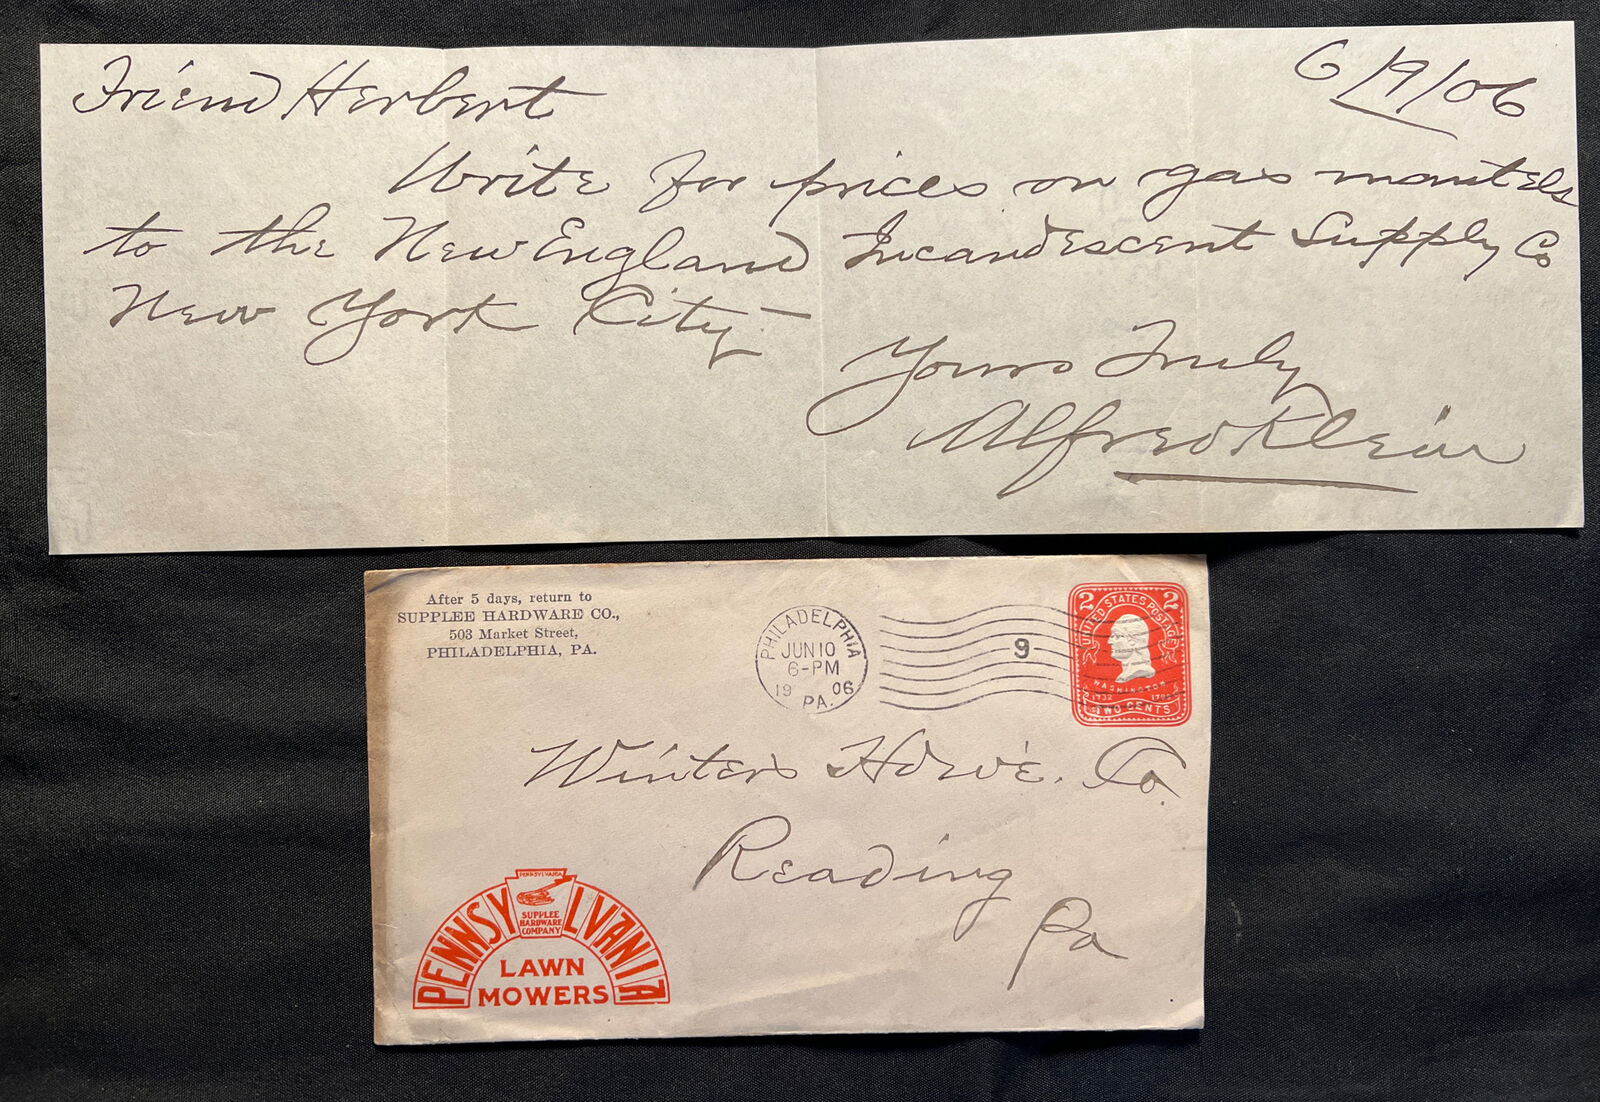 Antique 1906 PENNSYLVANIA Lawn Mowers SUPPLEE Hardware Letter Envelope